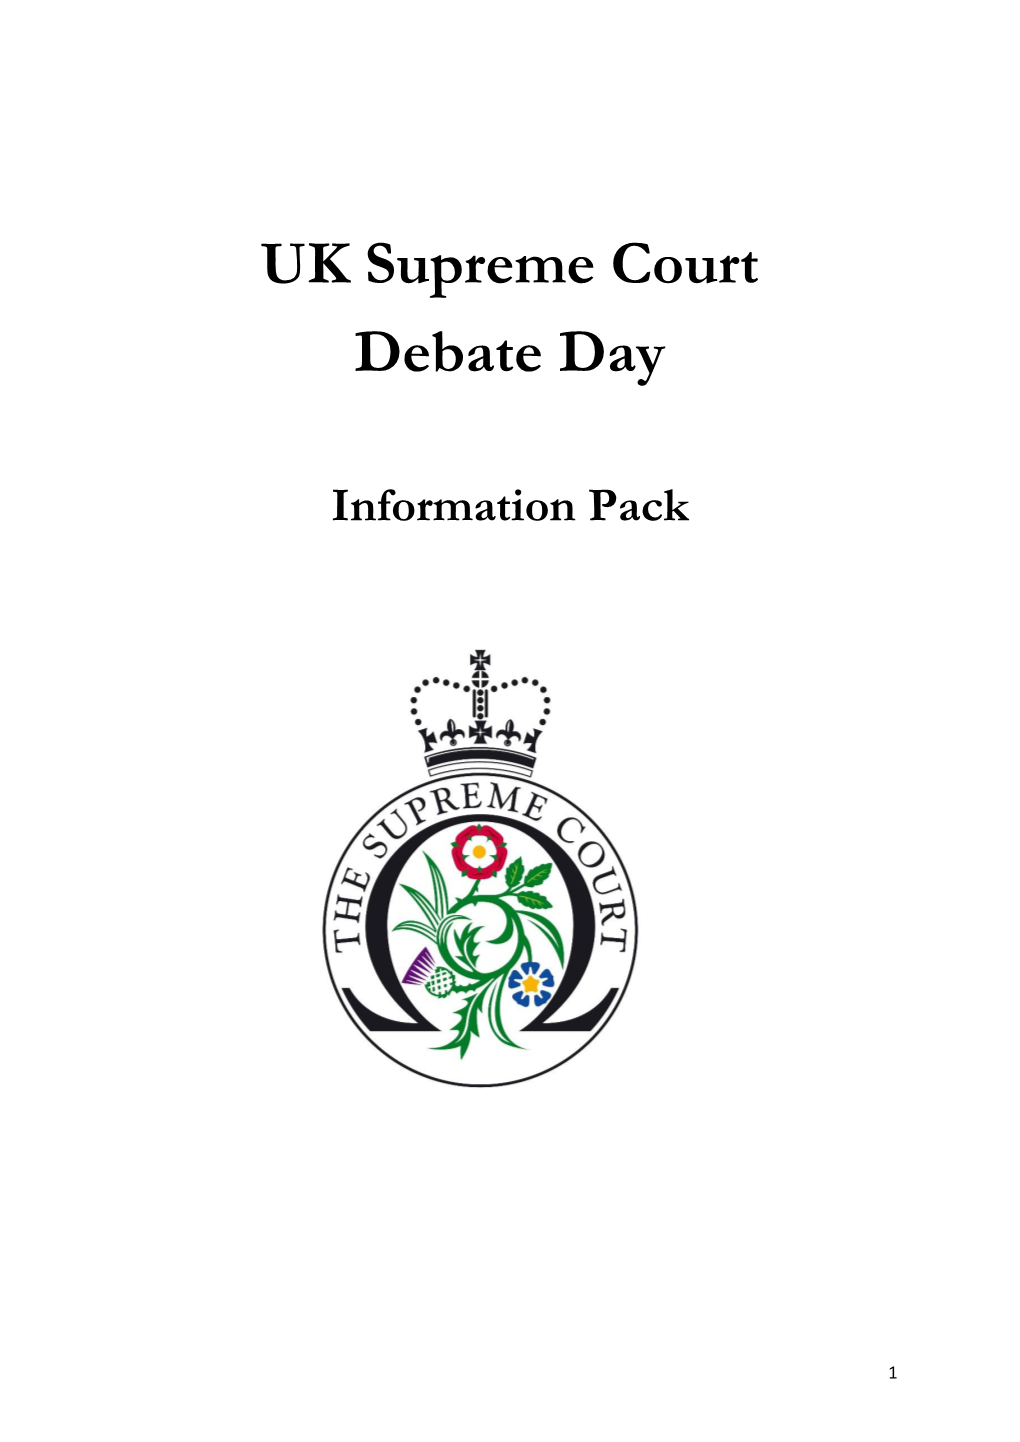 UK Supreme Court Debate Day